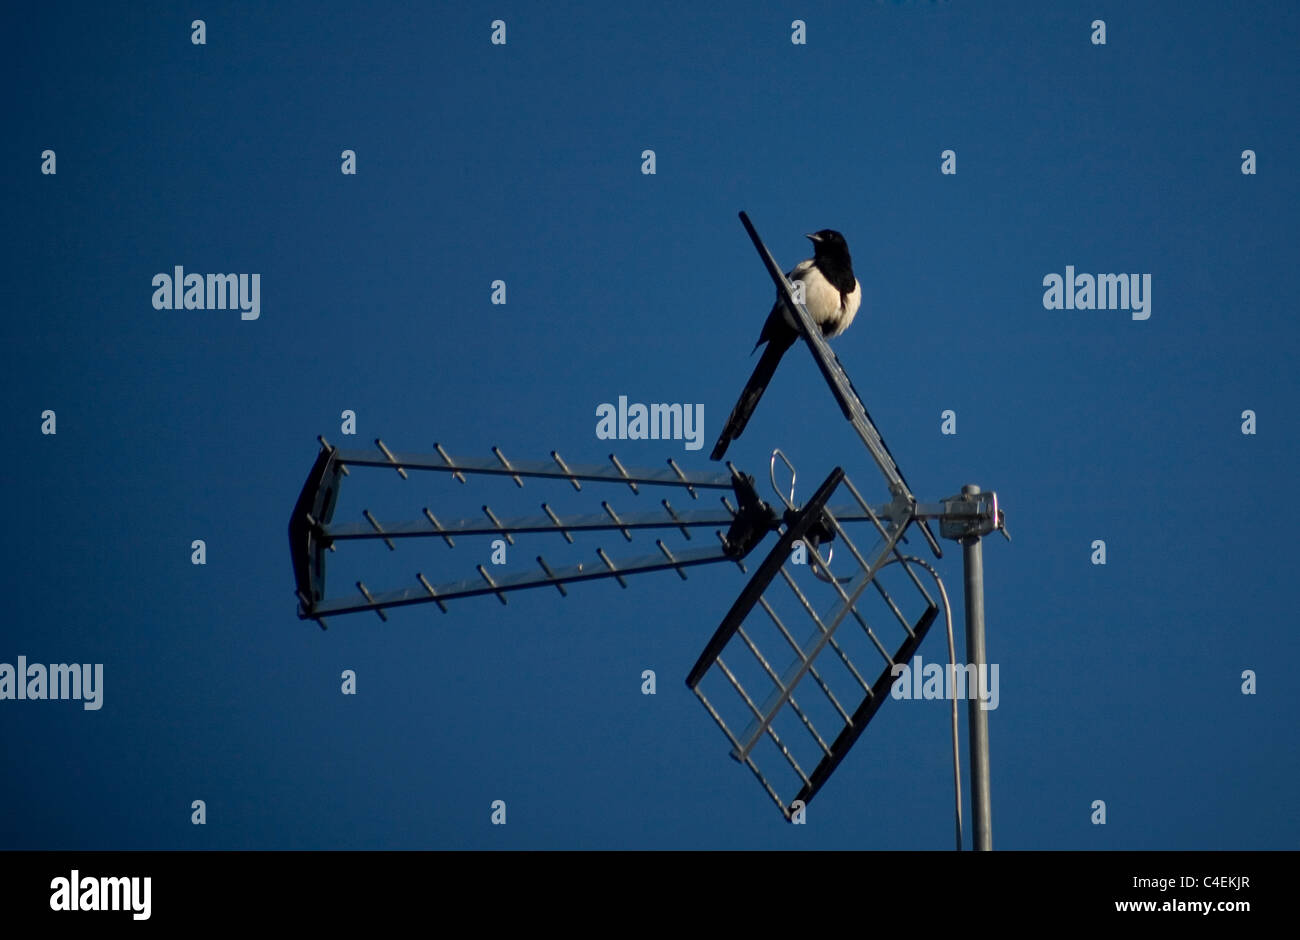 Una gazza o urraca bird (Pica pica)posatoi in una antenna TV lungo la via francese che porta a Santiago de Compostela, Spagna Foto Stock